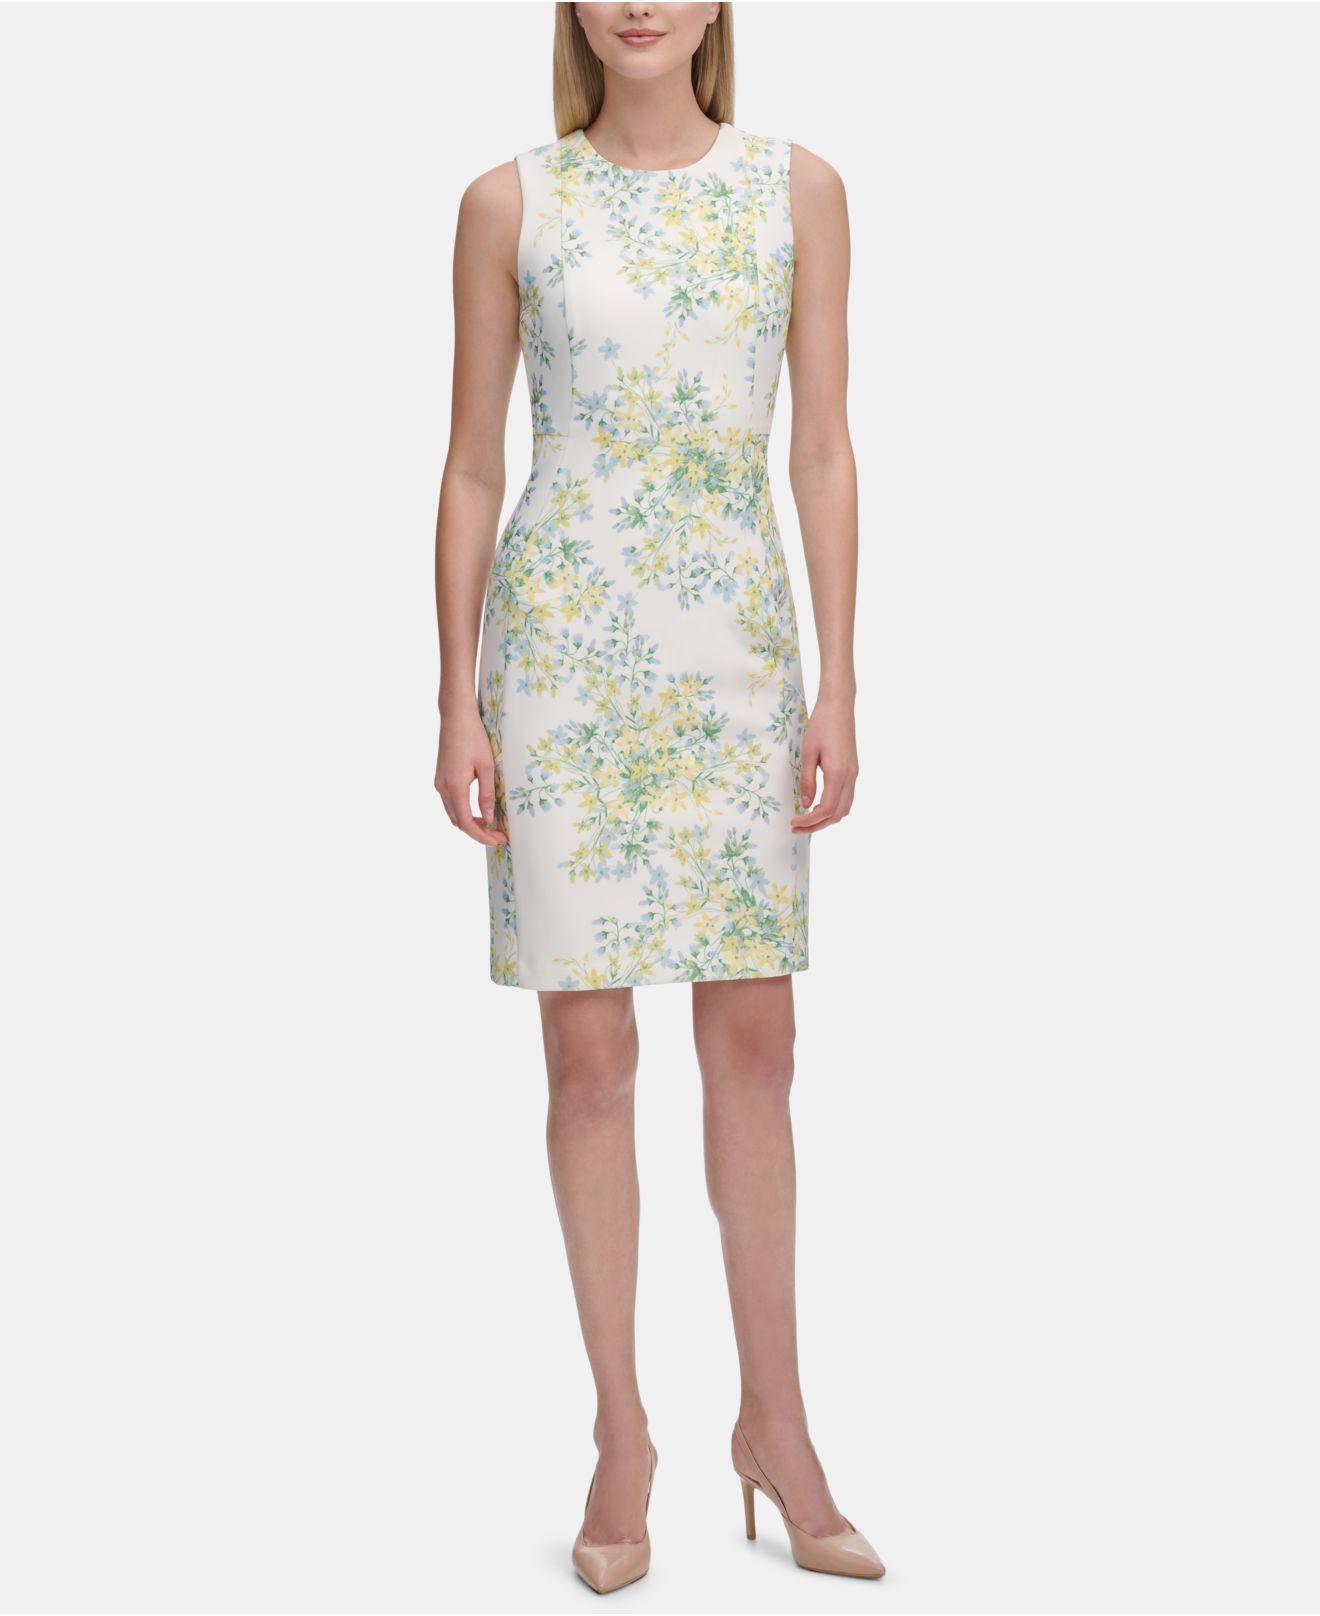 Lyst - Calvin Klein Floral-print Sleeveless Sheath Dress